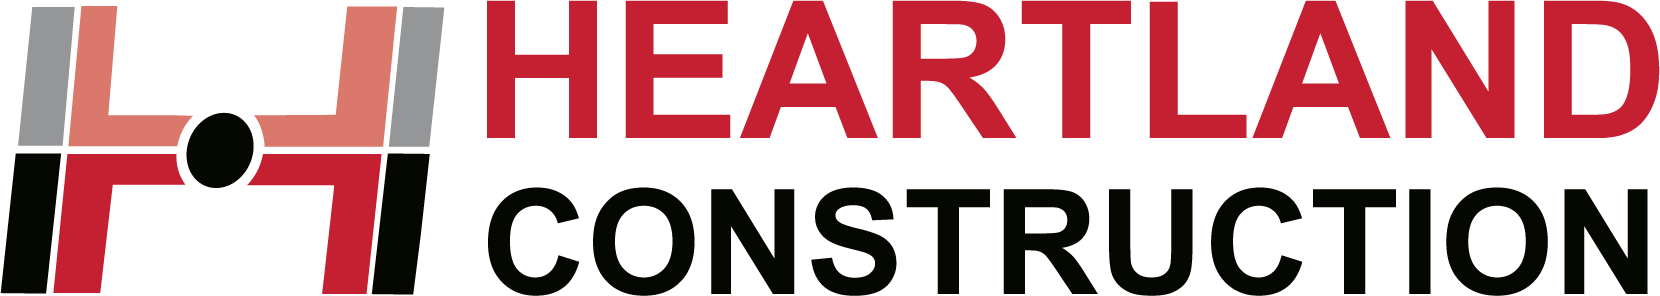 Heartland Construction logo.png